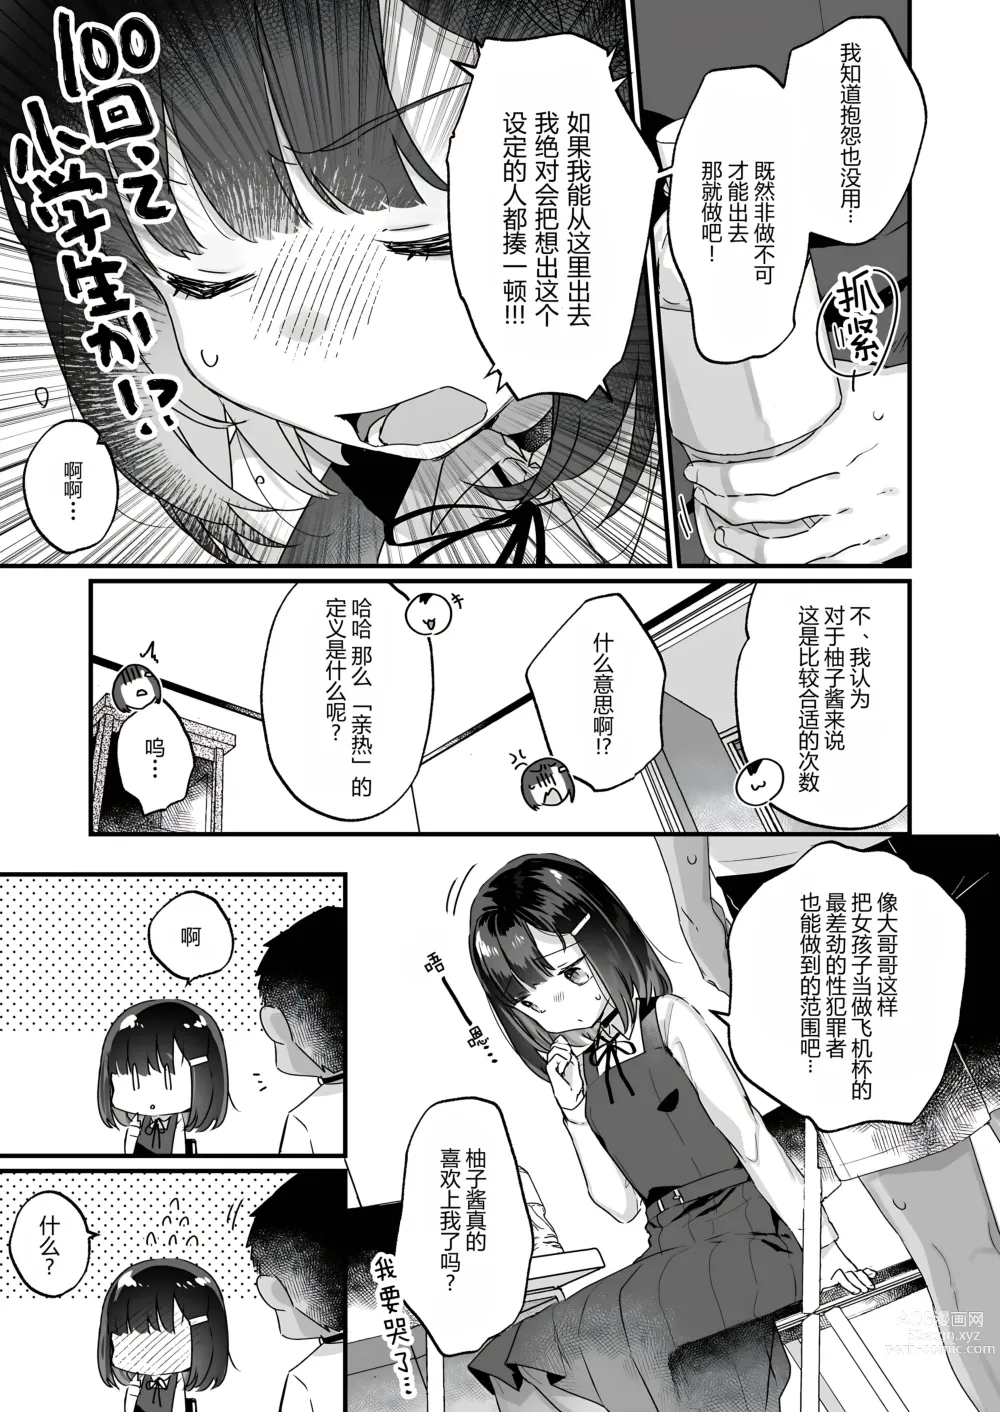 Page 6 of doujinshi 不恩爱亲热做爱100回高潮就出不去的房间